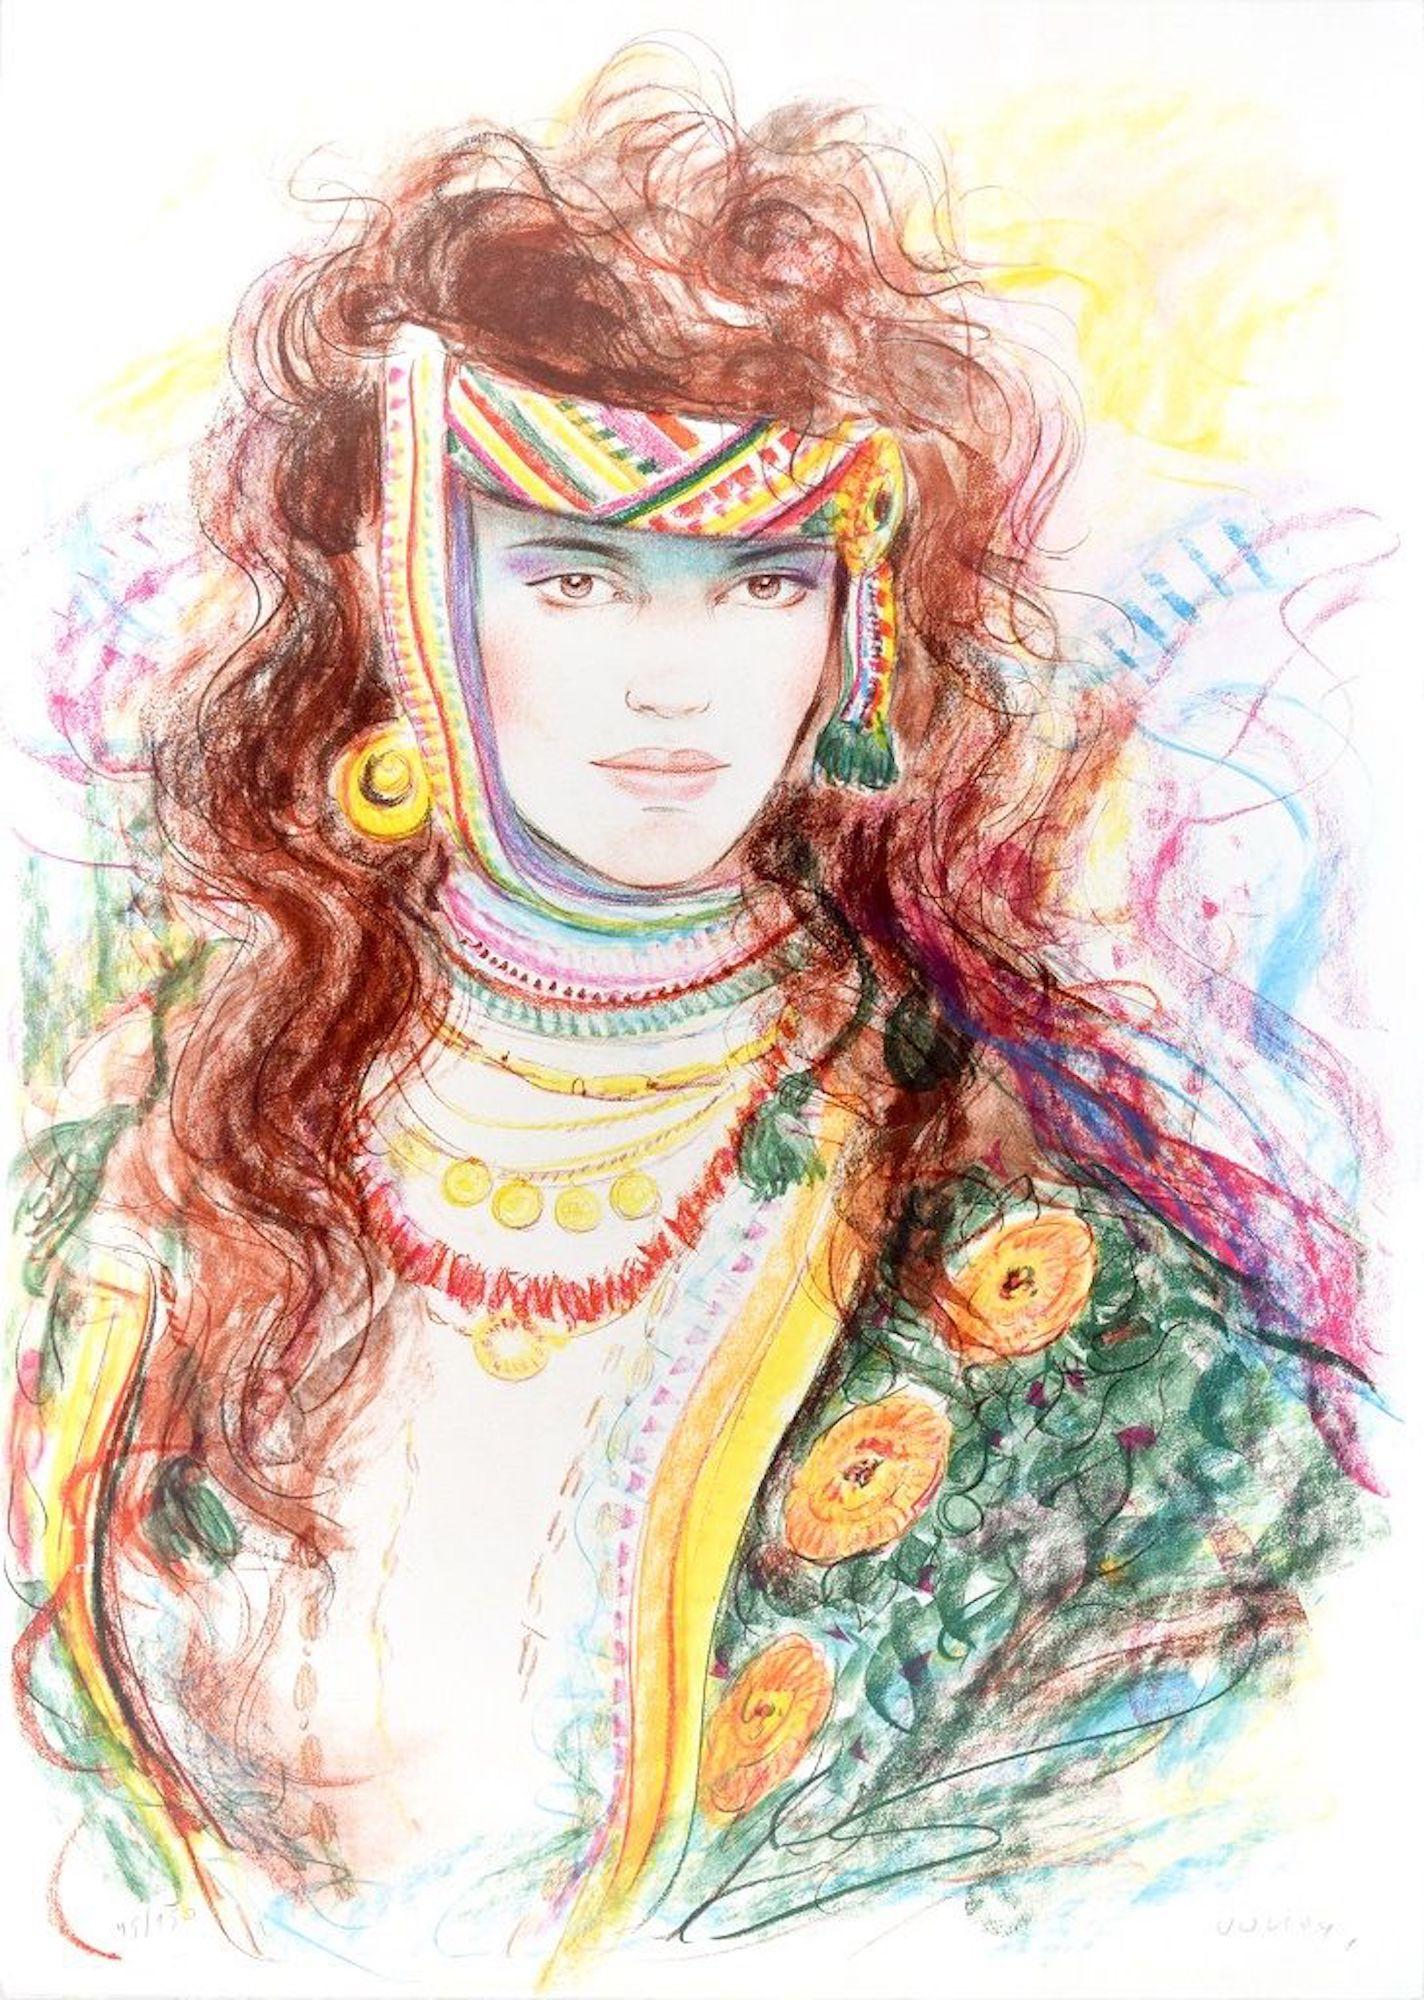 Berber Woman  - Original Lithograph by Jovan Vulic - 1988